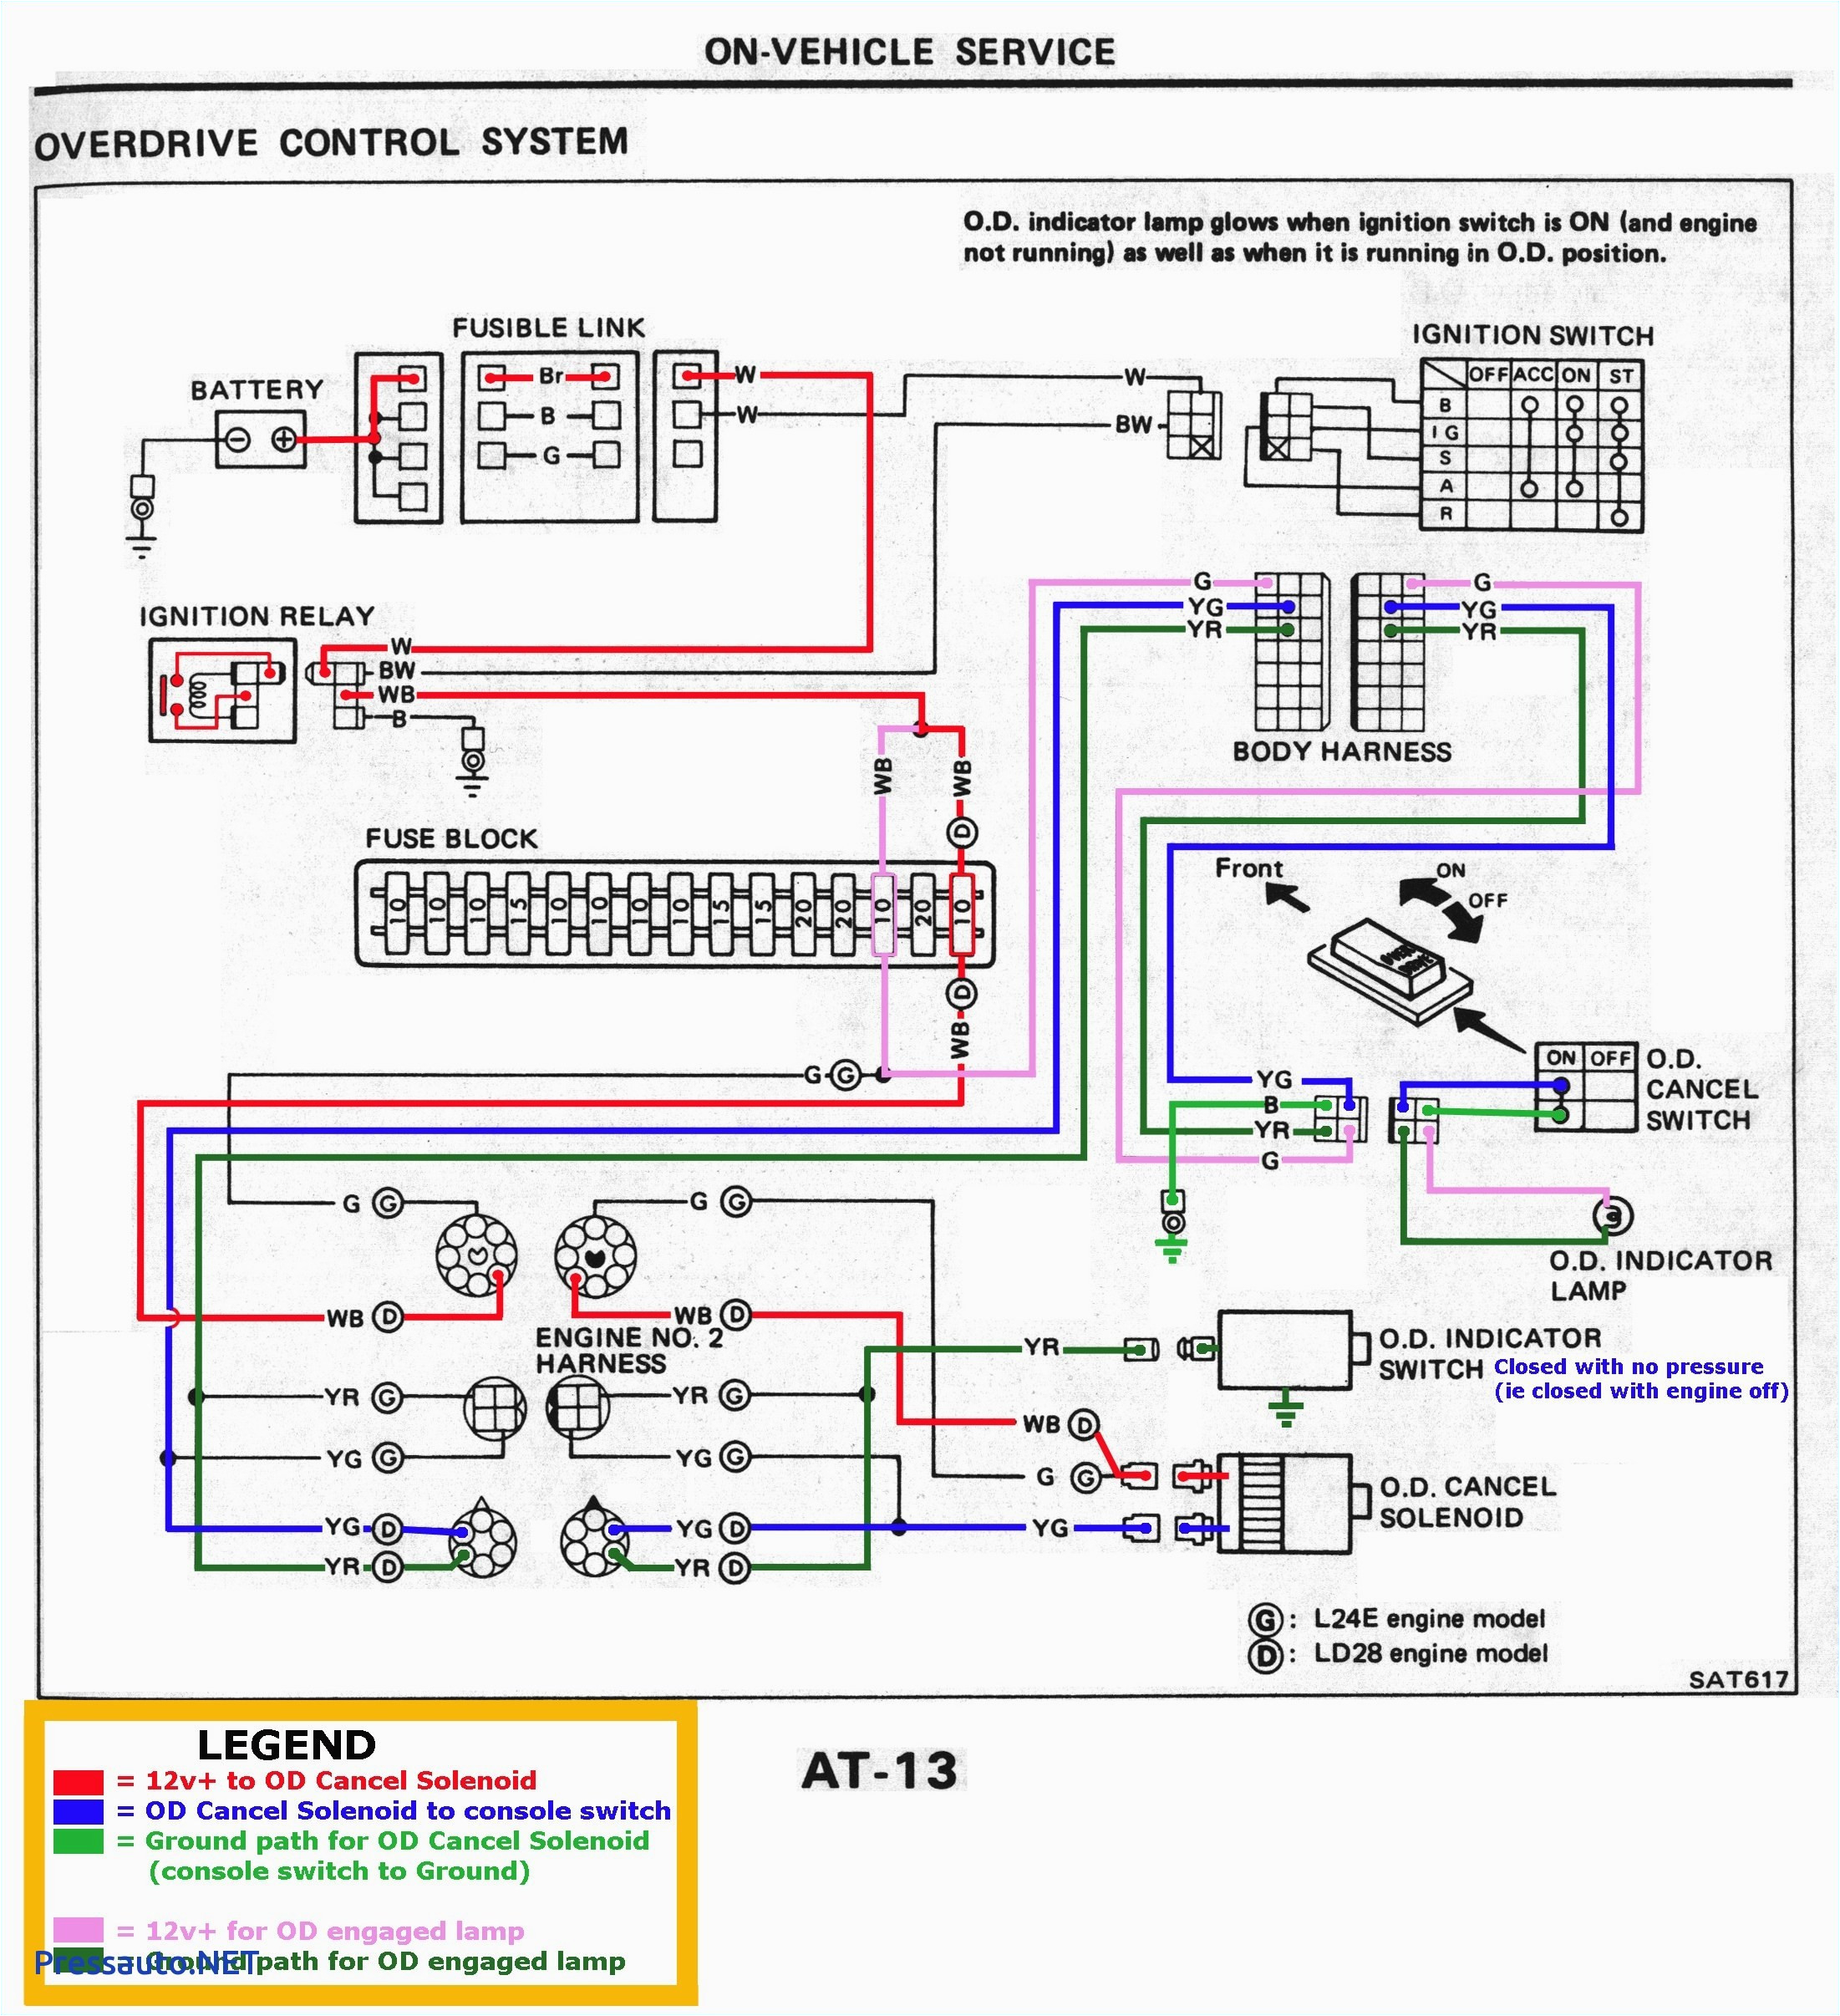 john deere wiring diagram fresh john deere wiring diagrams new wiring diagram for john deere gator